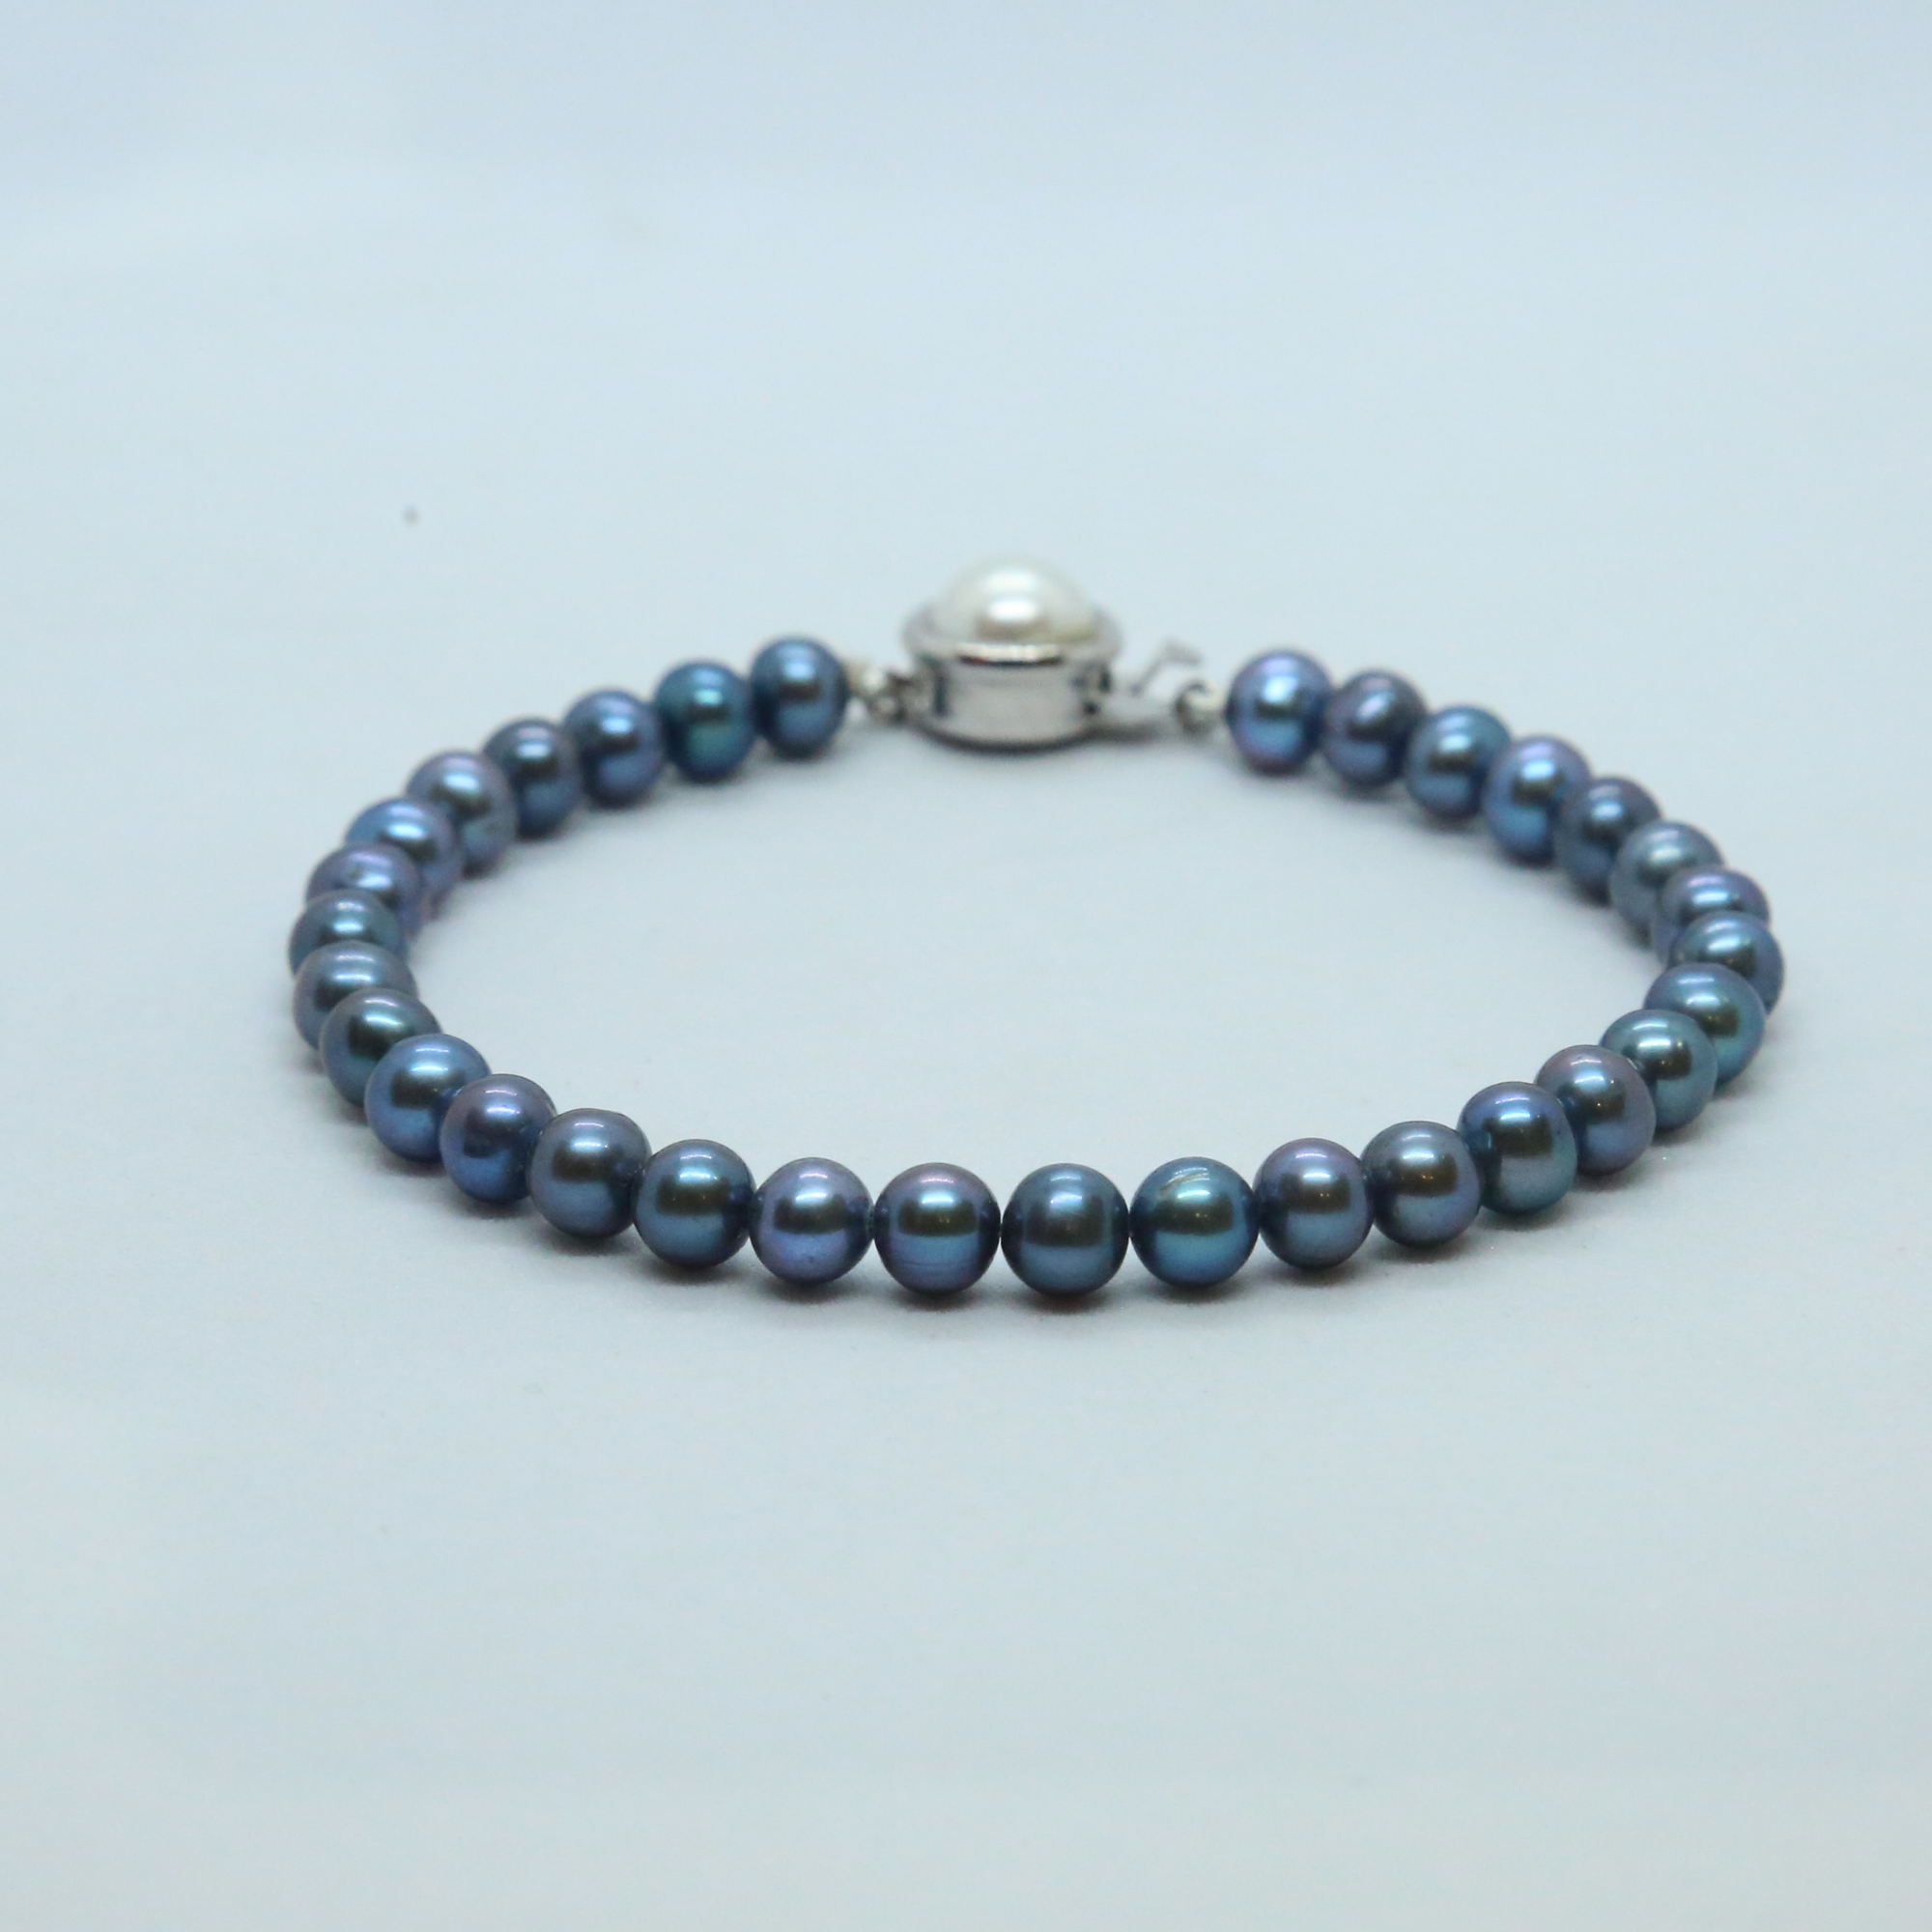 Exquisite 6mm Light Blue Round Pearls Bracelet